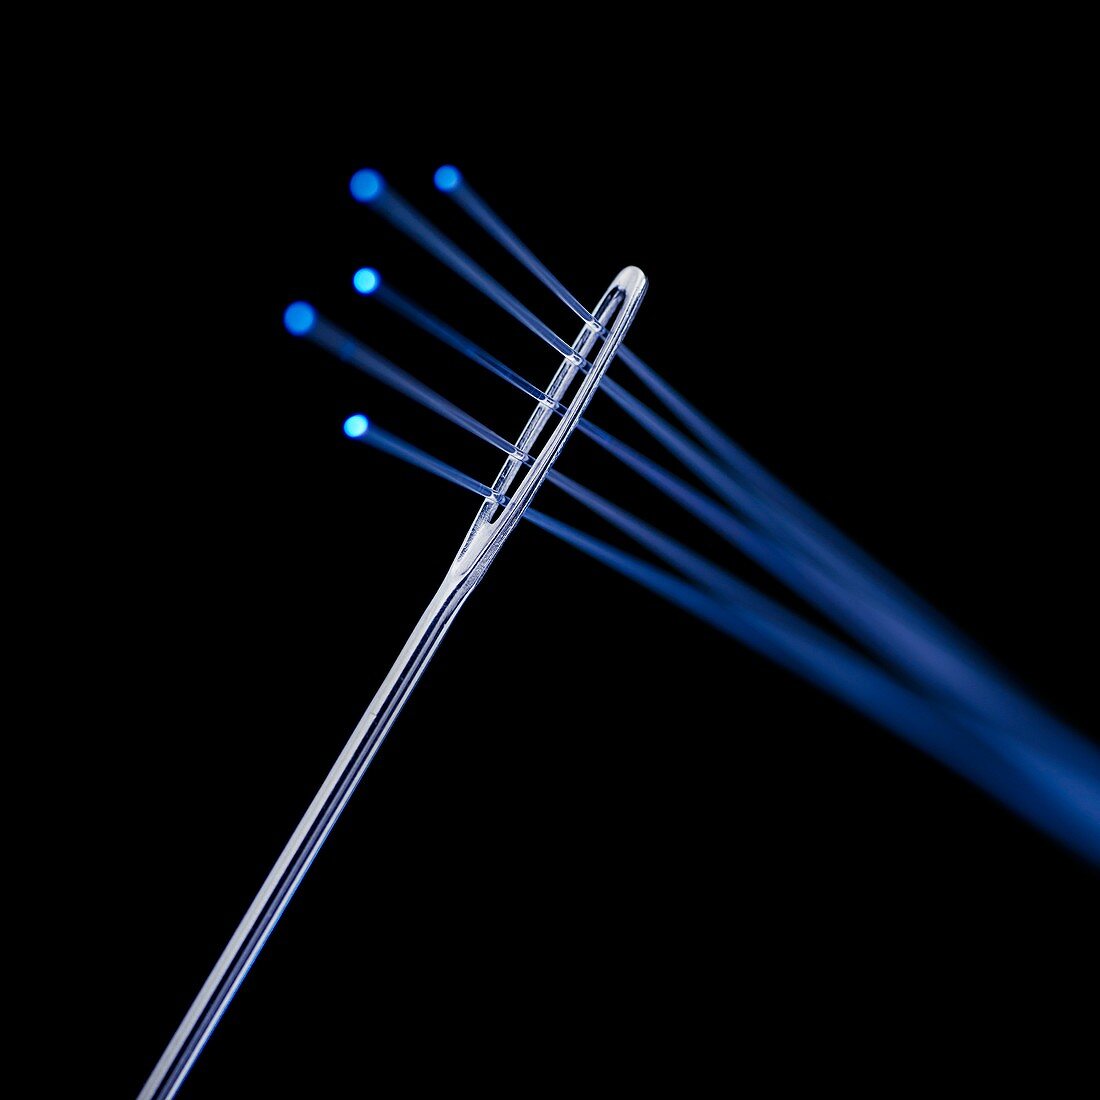 Fibre optics and needle